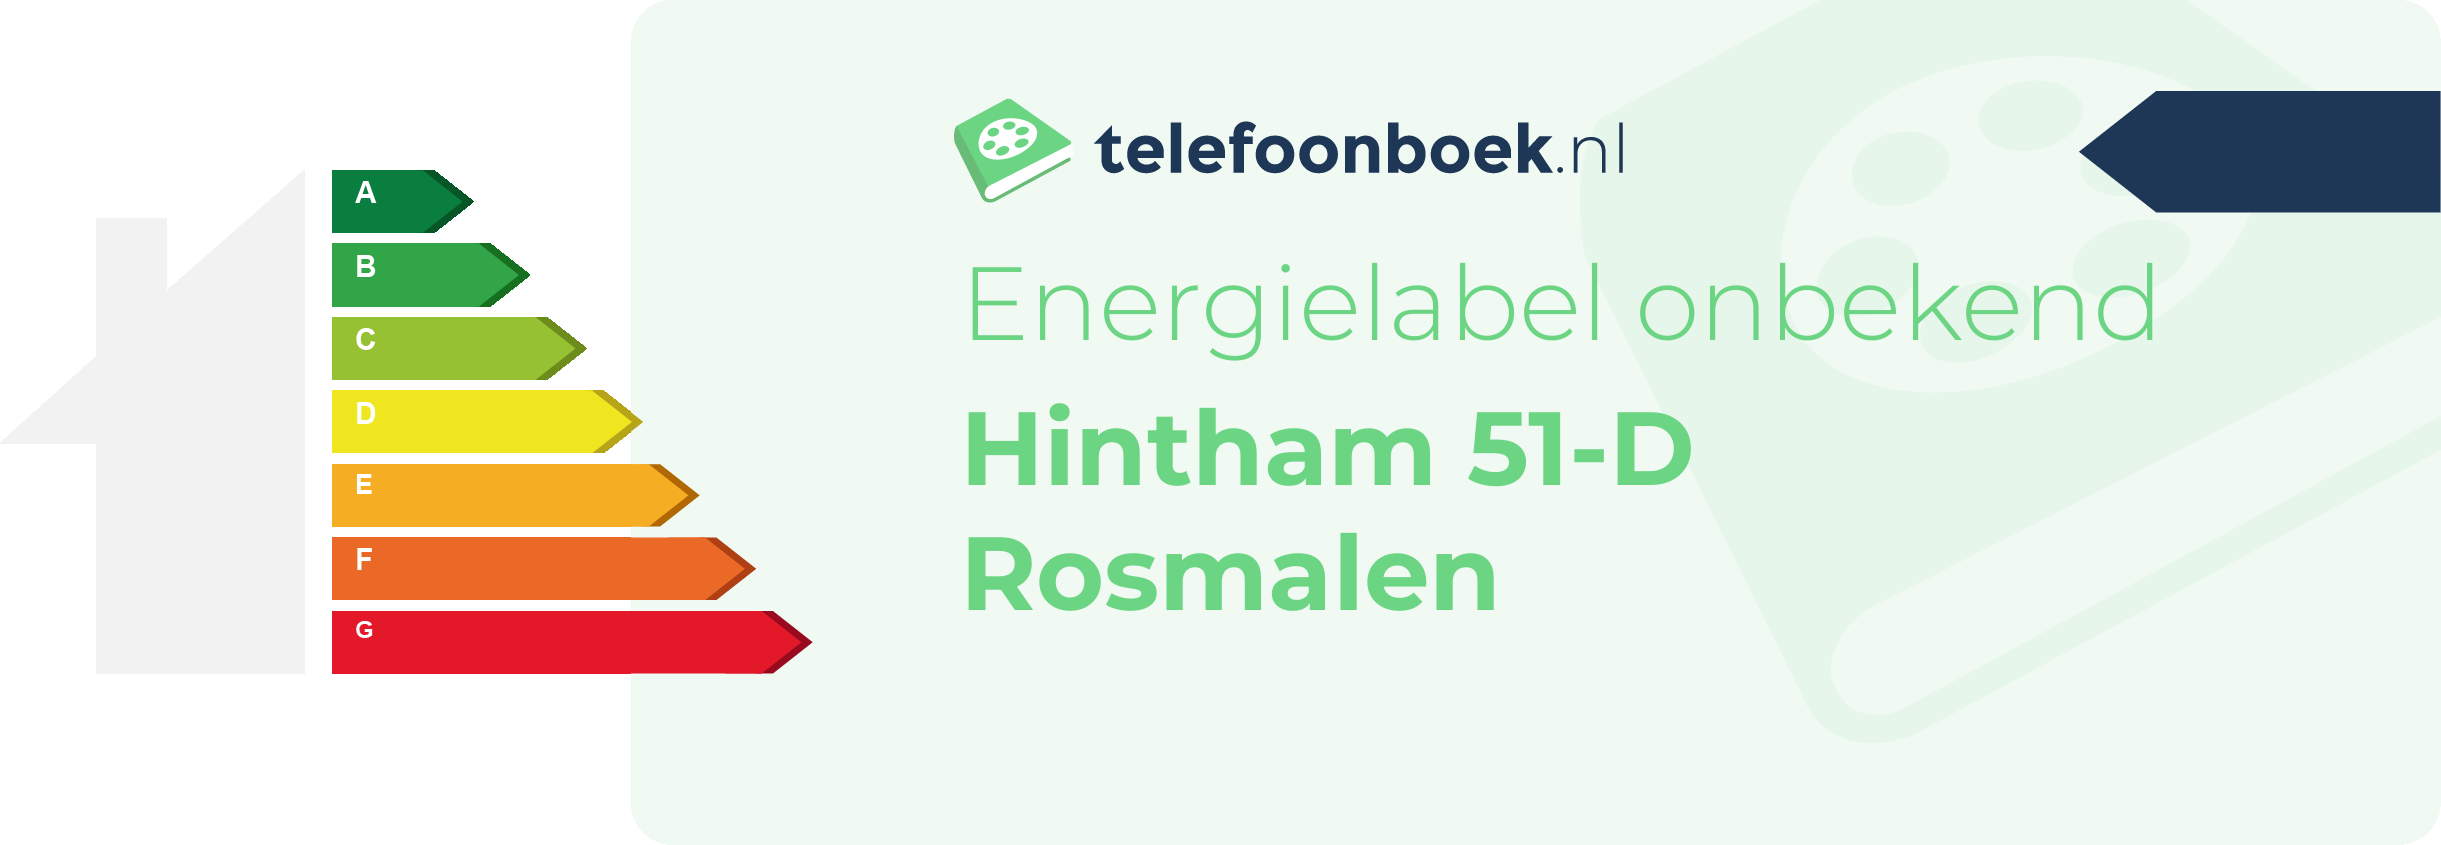 Energielabel Hintham 51-D Rosmalen